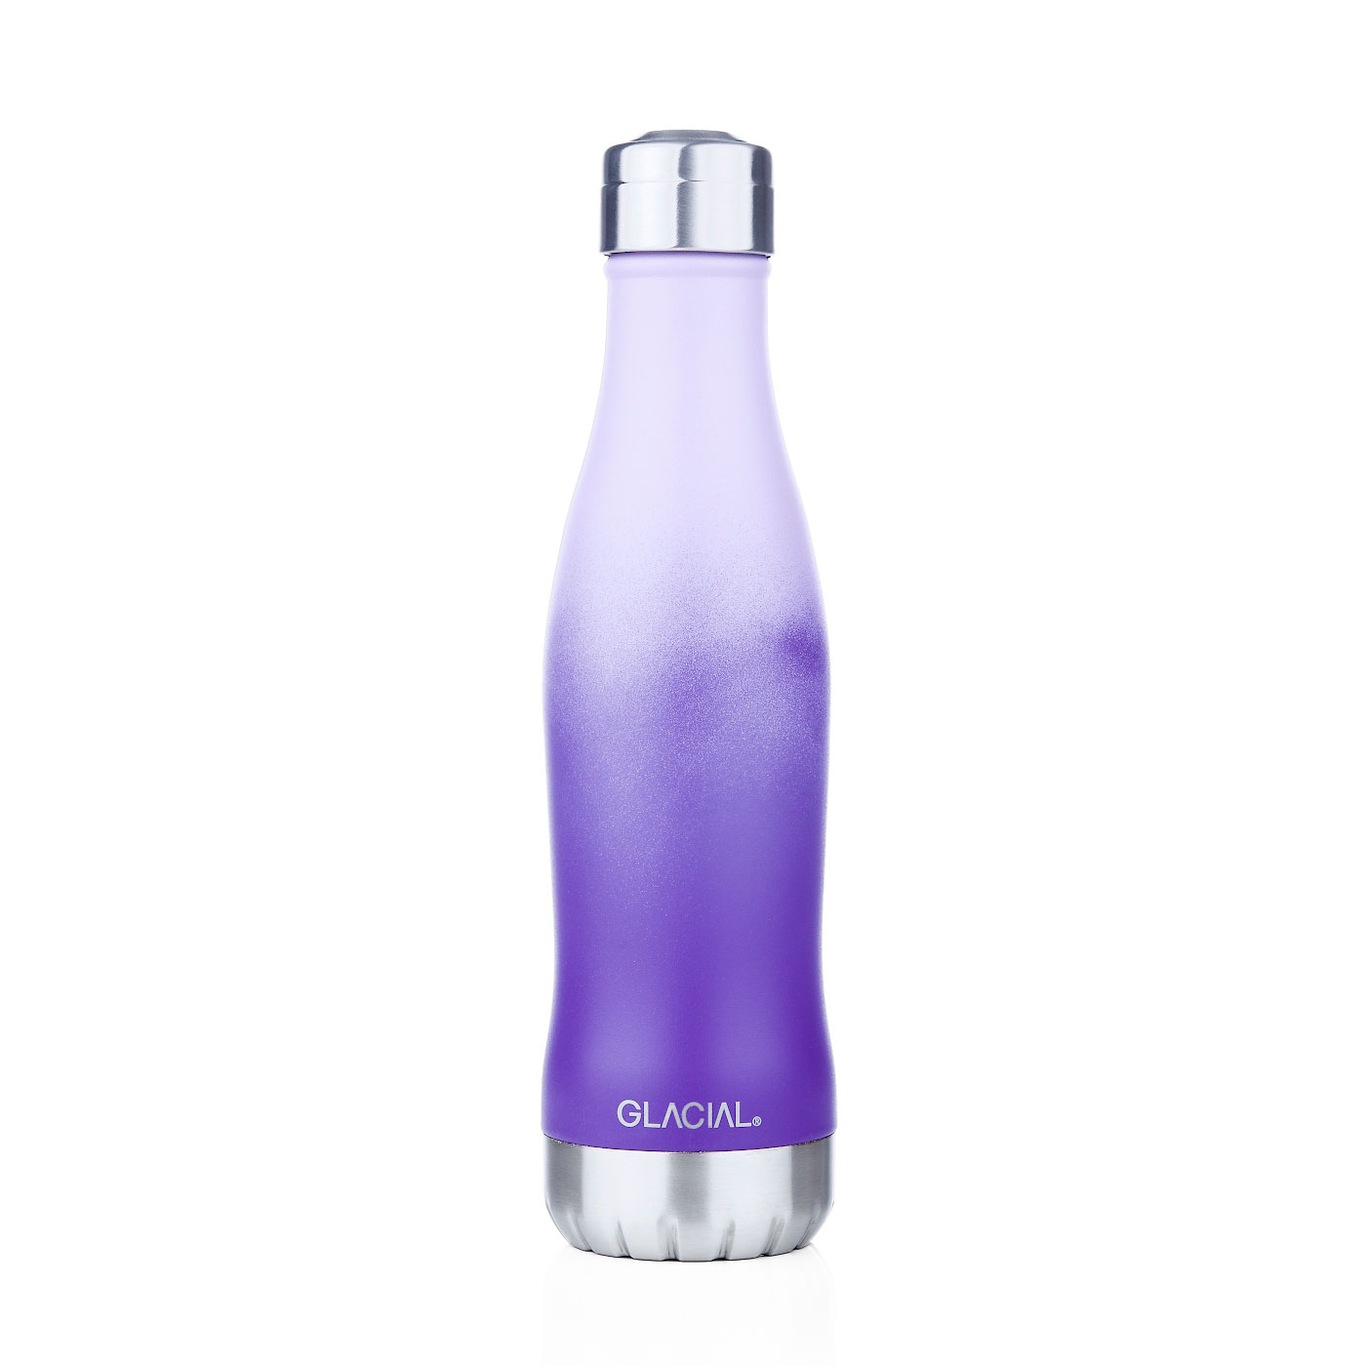 https://royaldesign.com/image/2/glacial-water-bottle-40-cl-98?w=800&quality=80